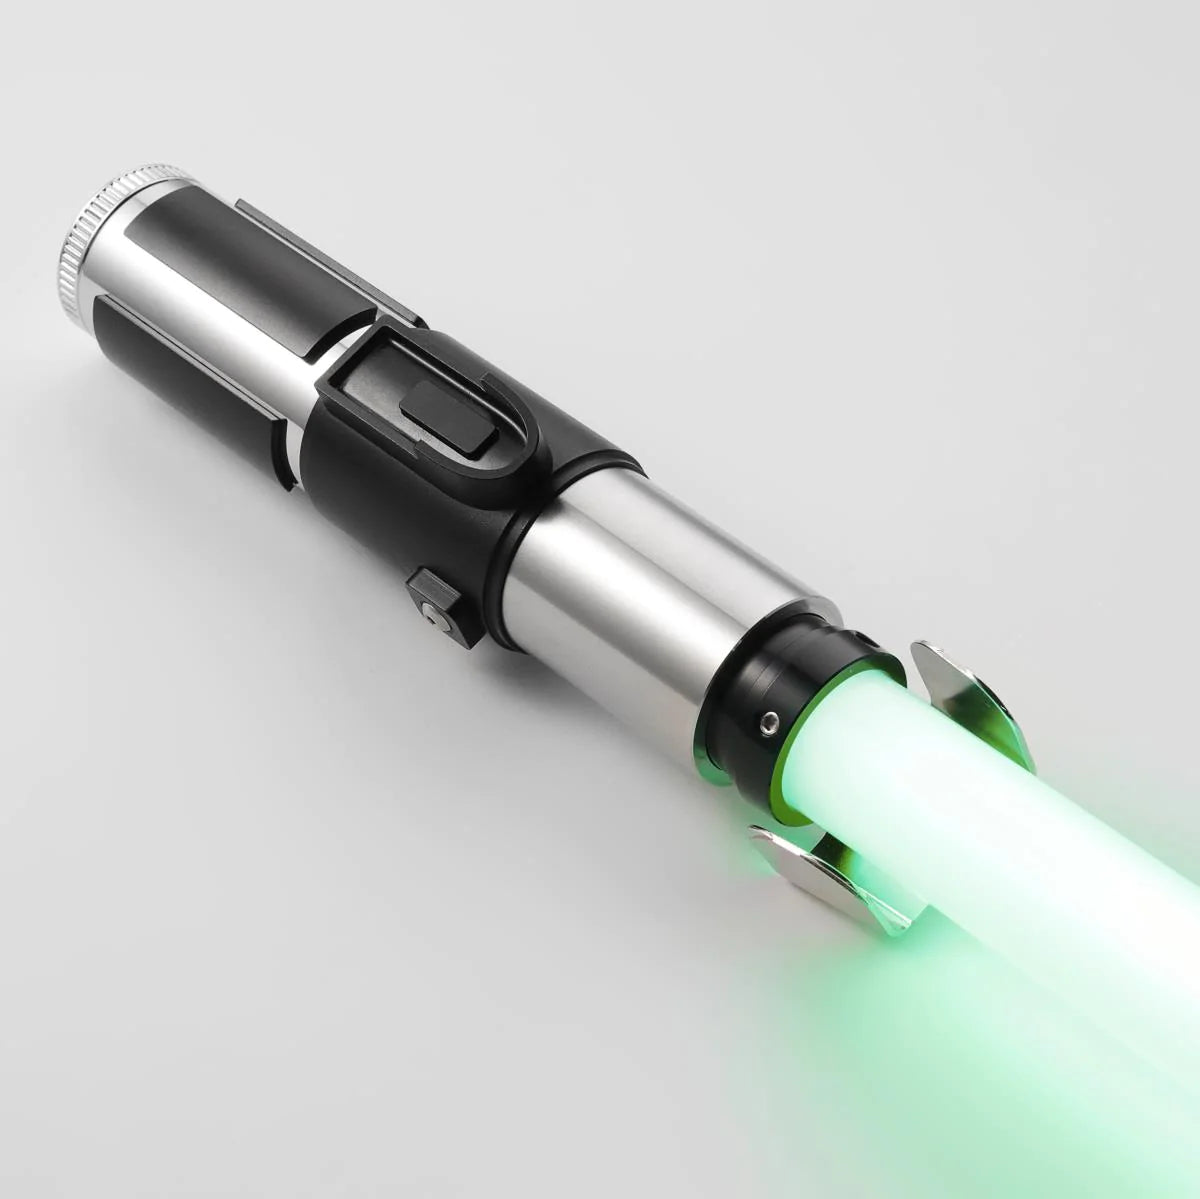 Yoda's Lightsaber